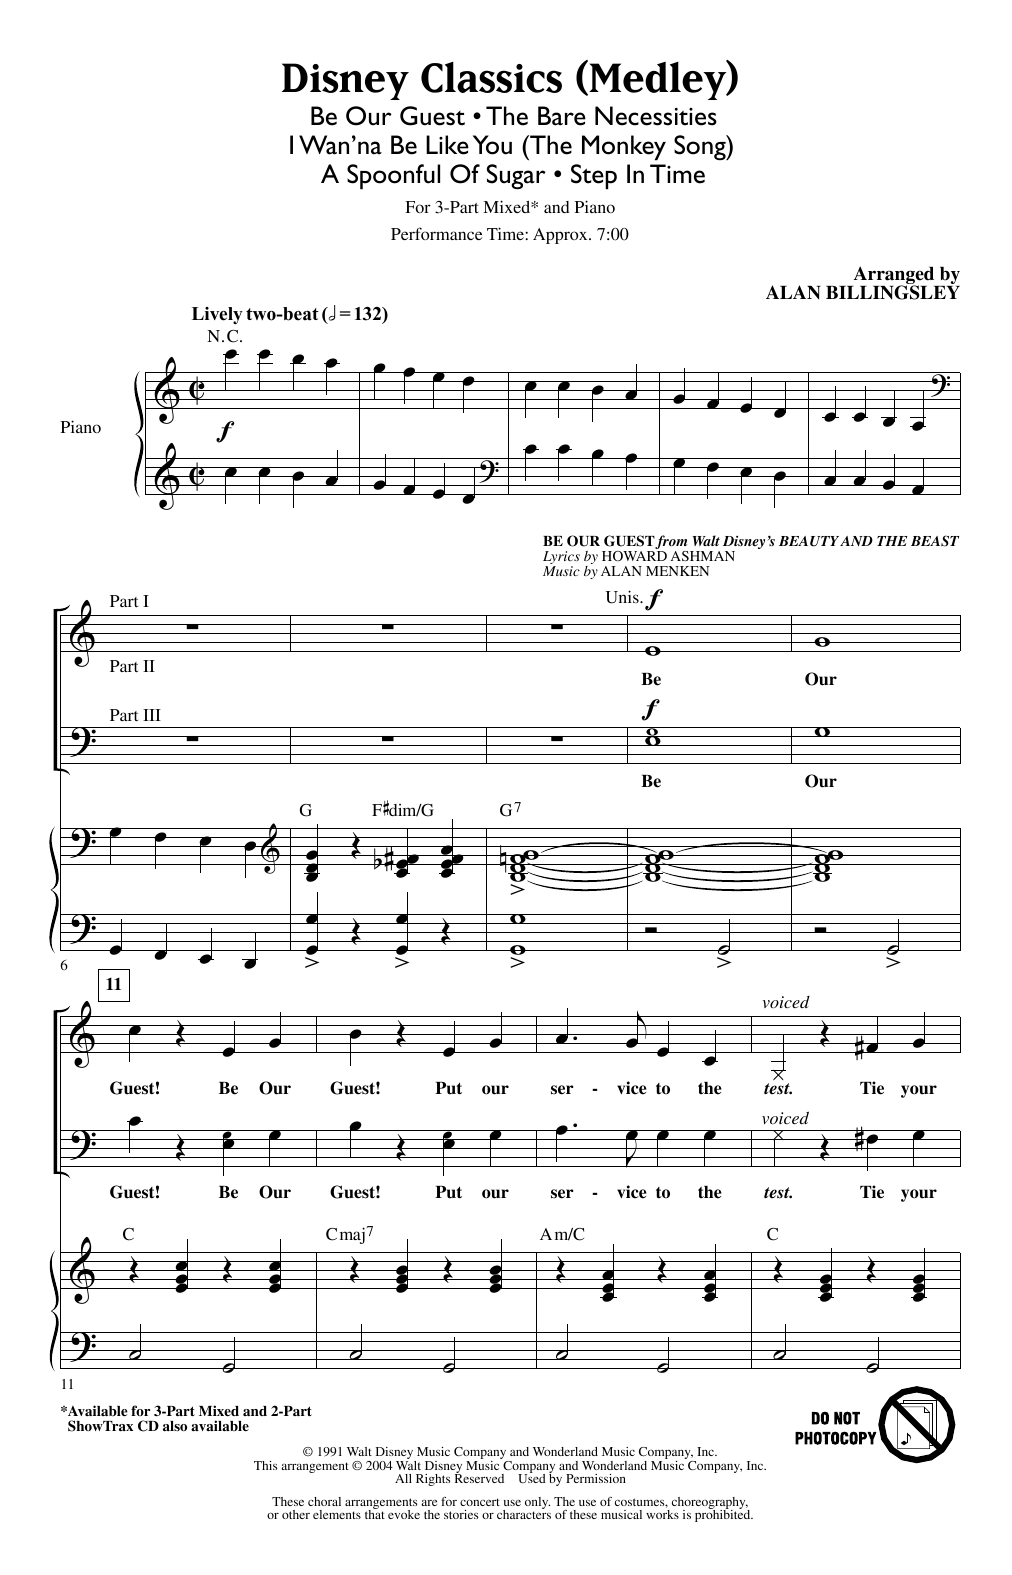 Alan Billingsley Disney Classics (Medley) sheet music notes and chords arranged for 3-Part Mixed Choir